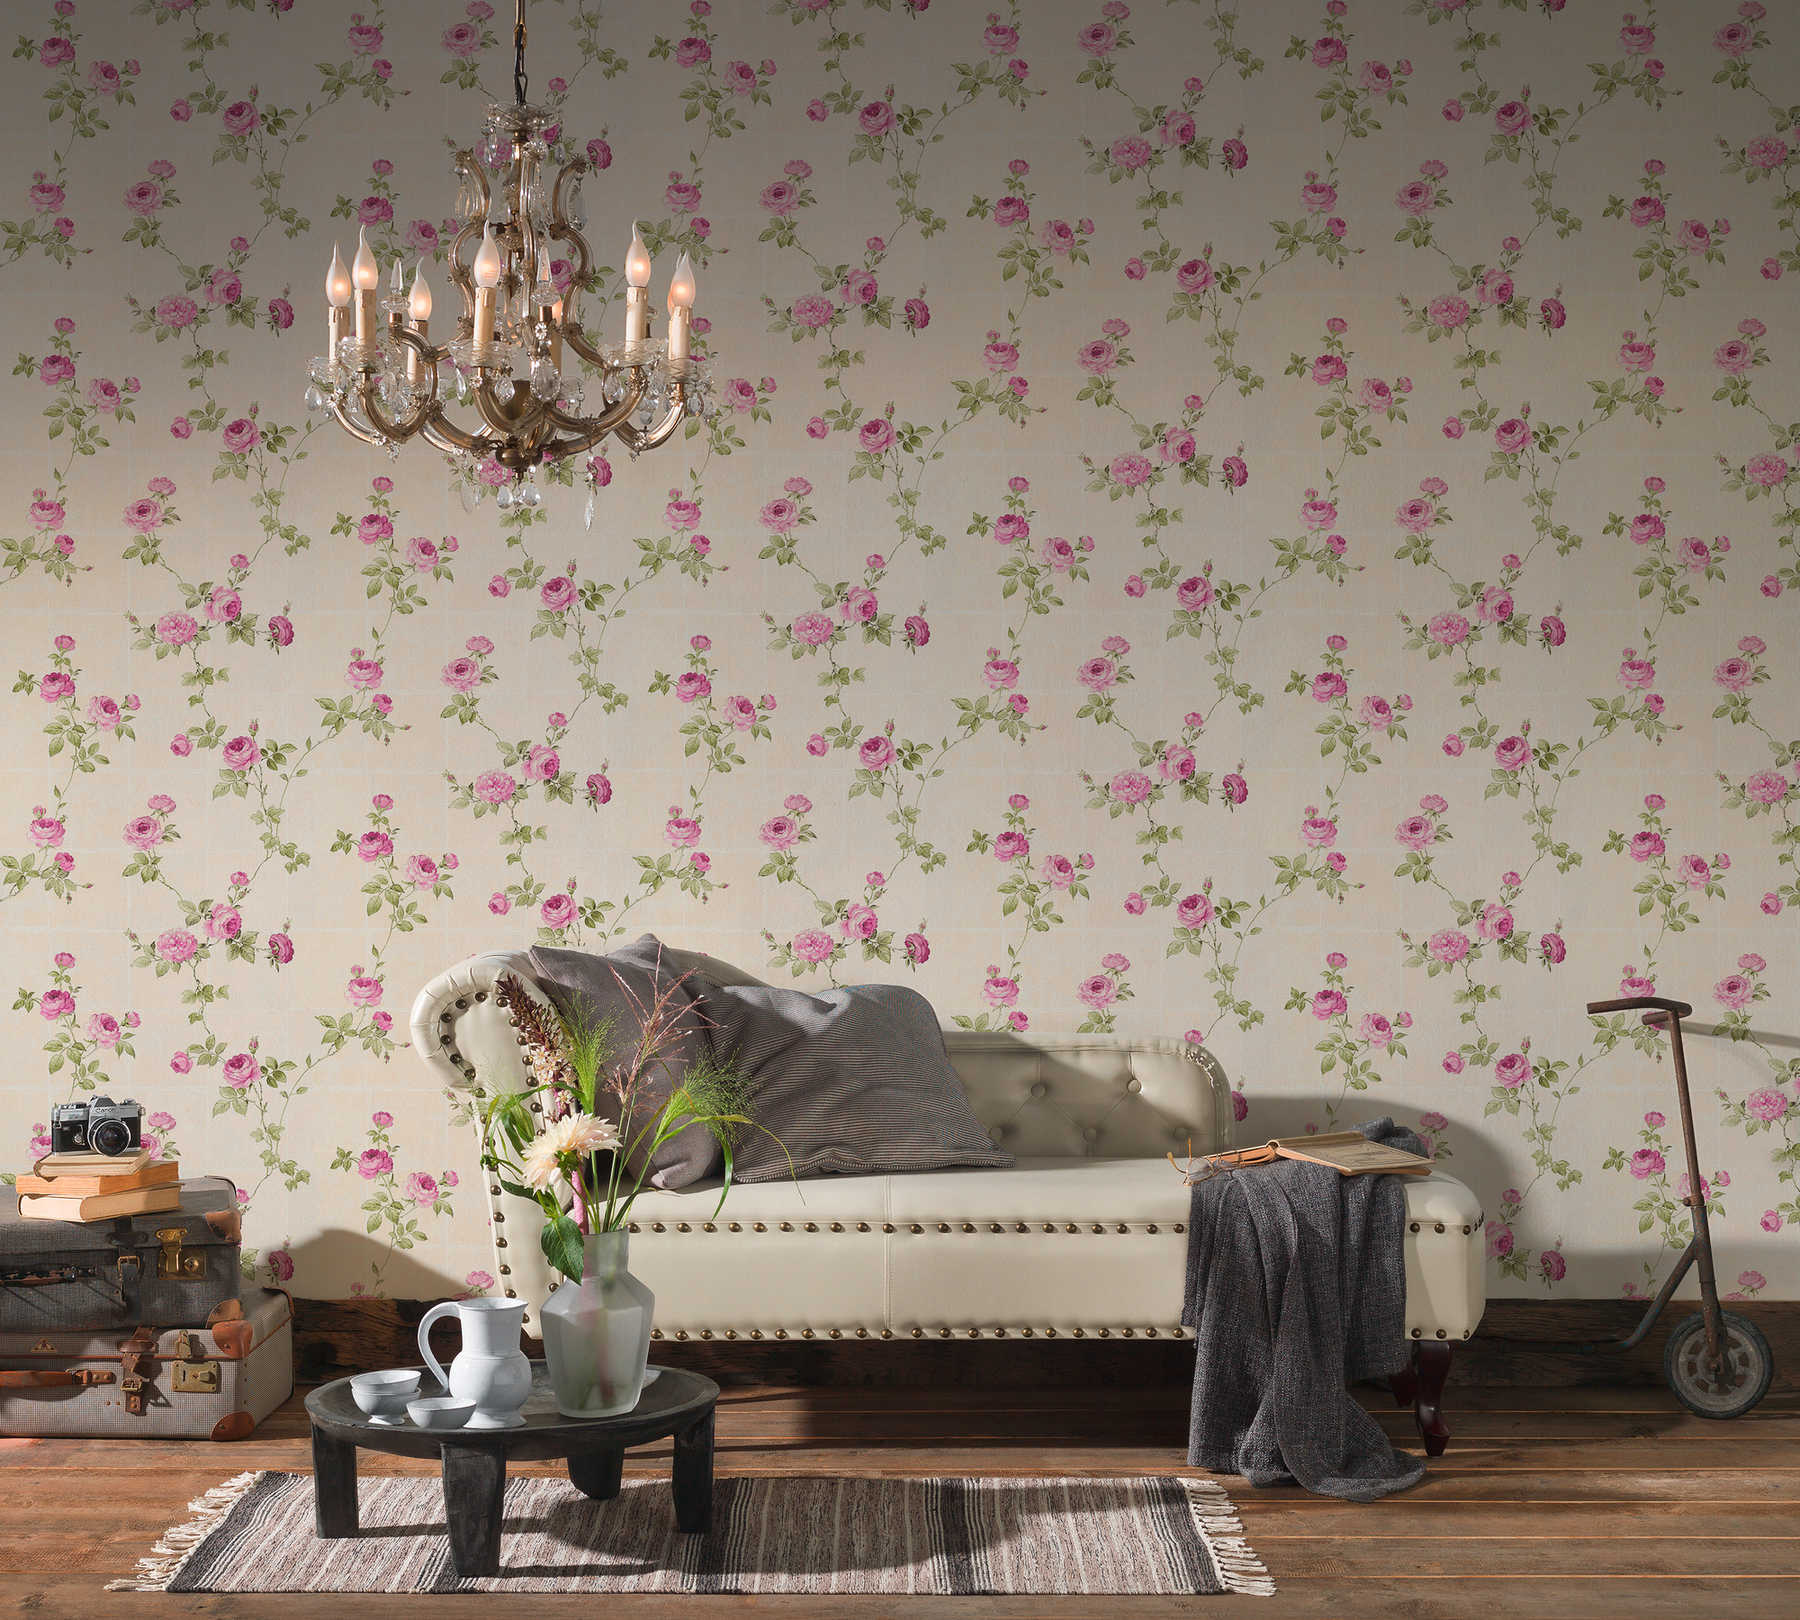             Tile look wallpaper with rose vines - beige, green, pink
        